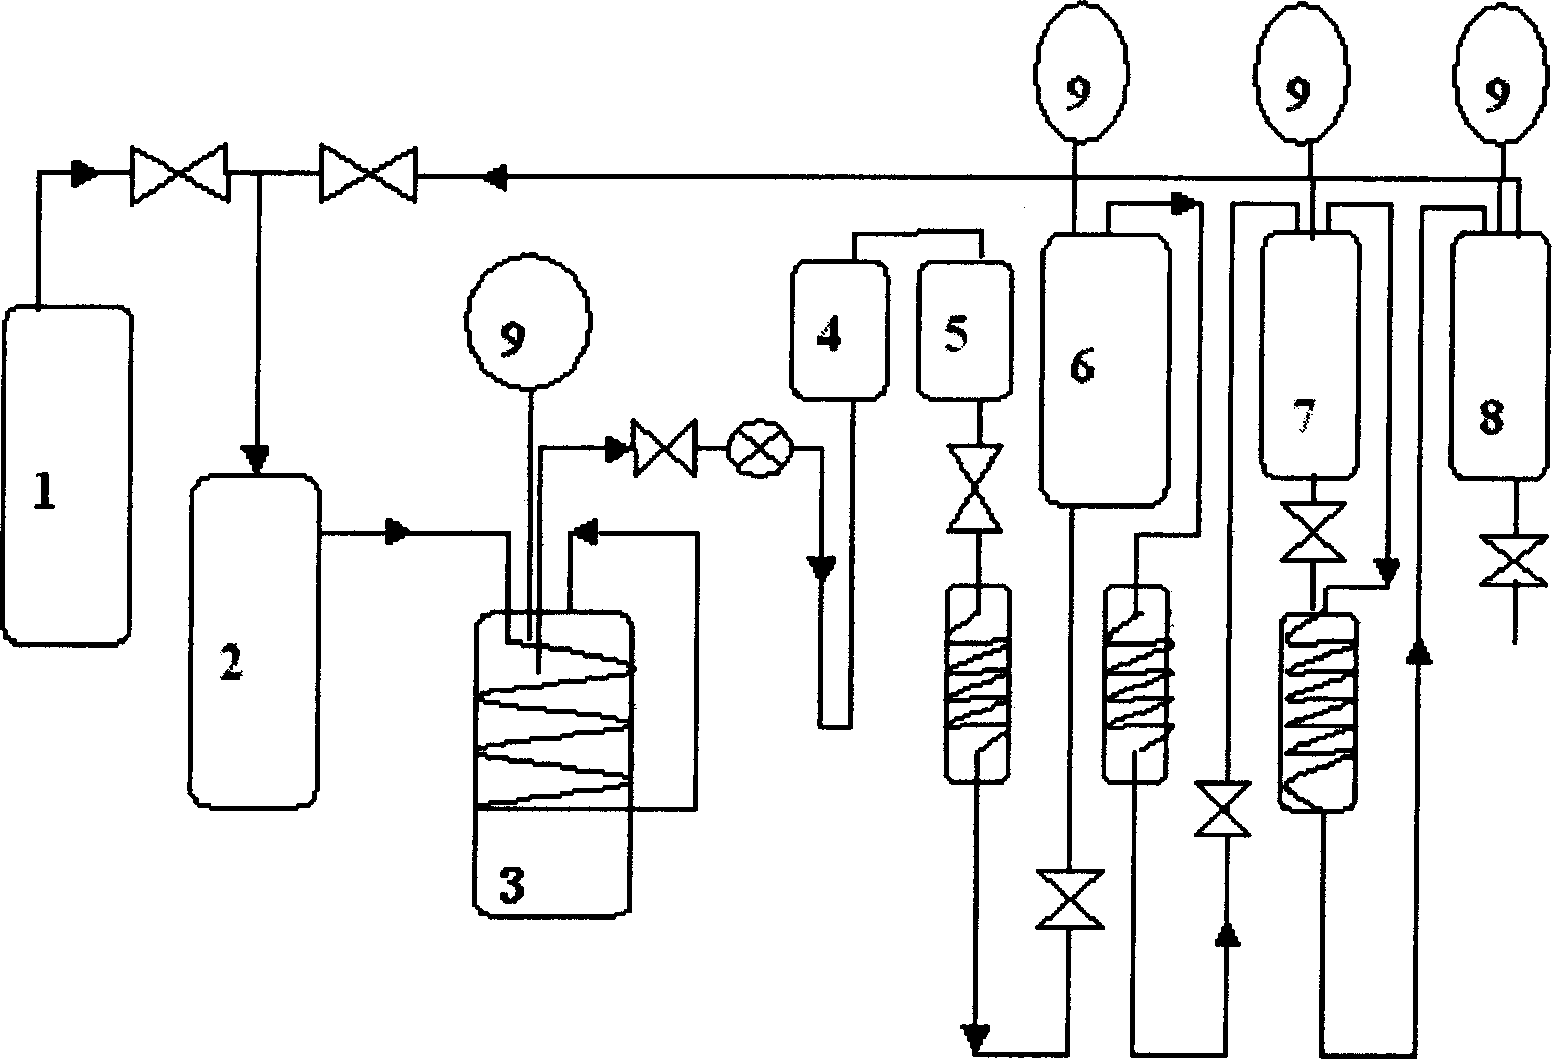 Marigold lutein supercritical CO2 extraction method